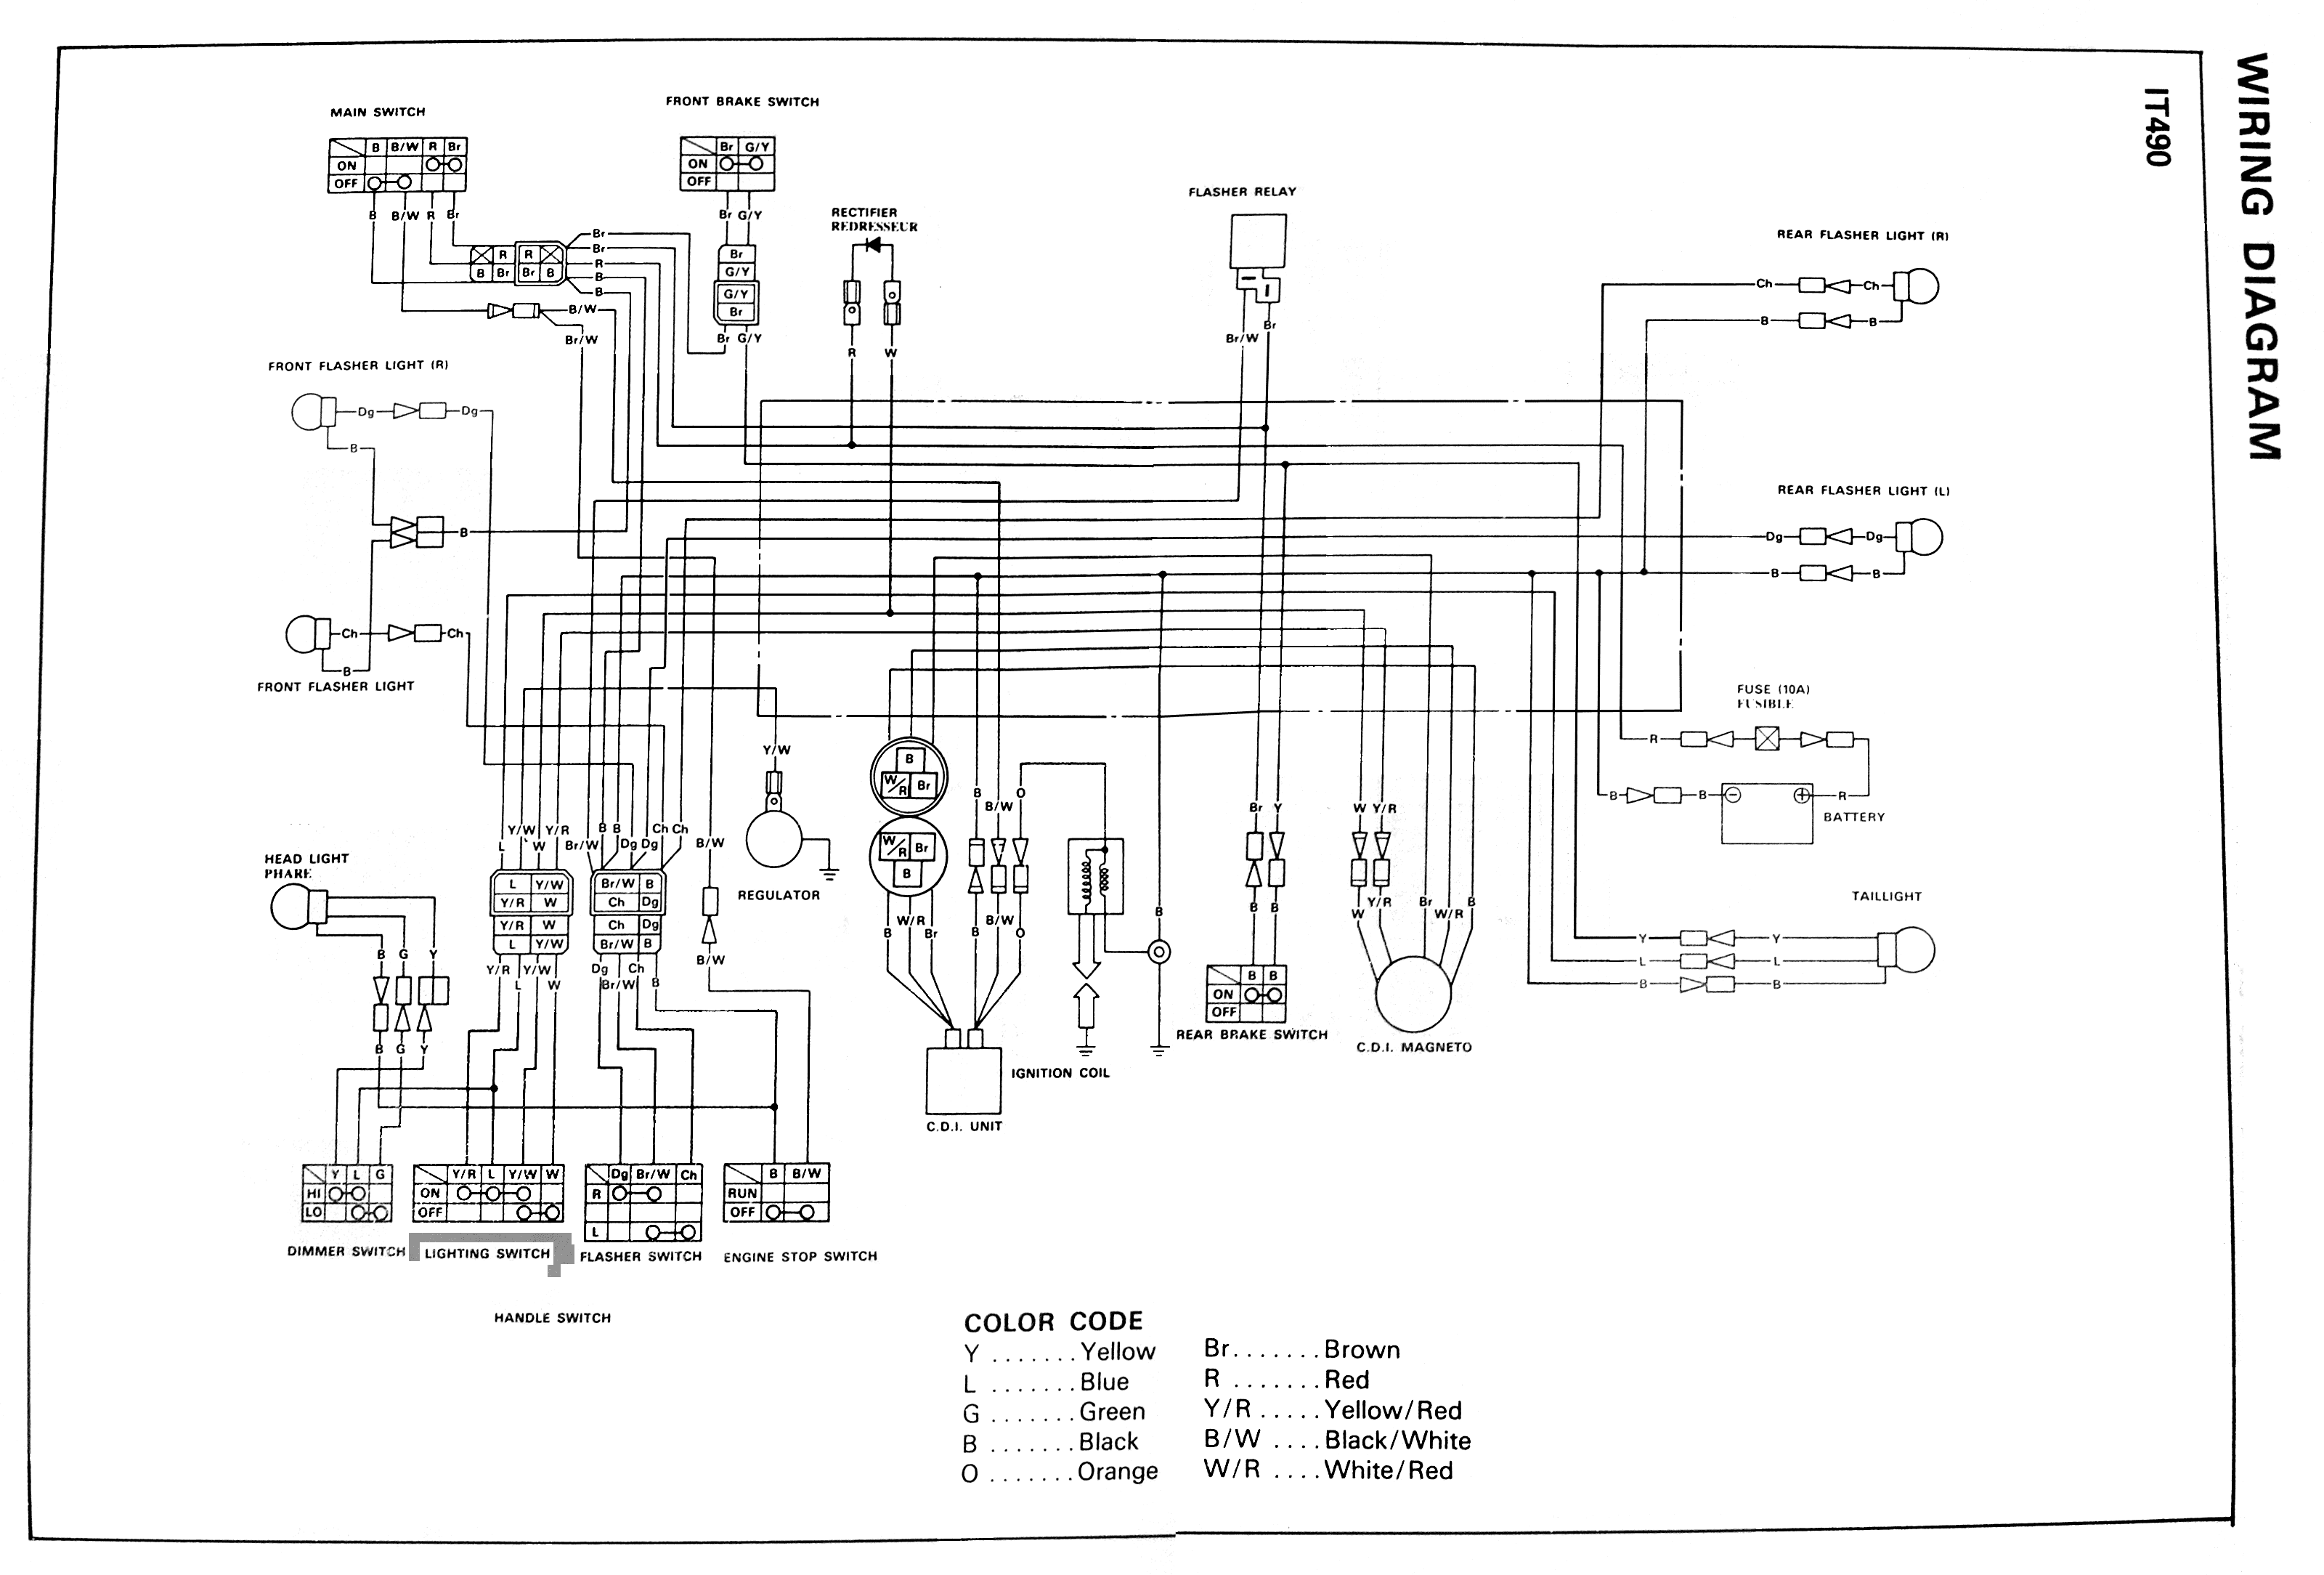 Rs 100 Yamaha Wiring Diagram